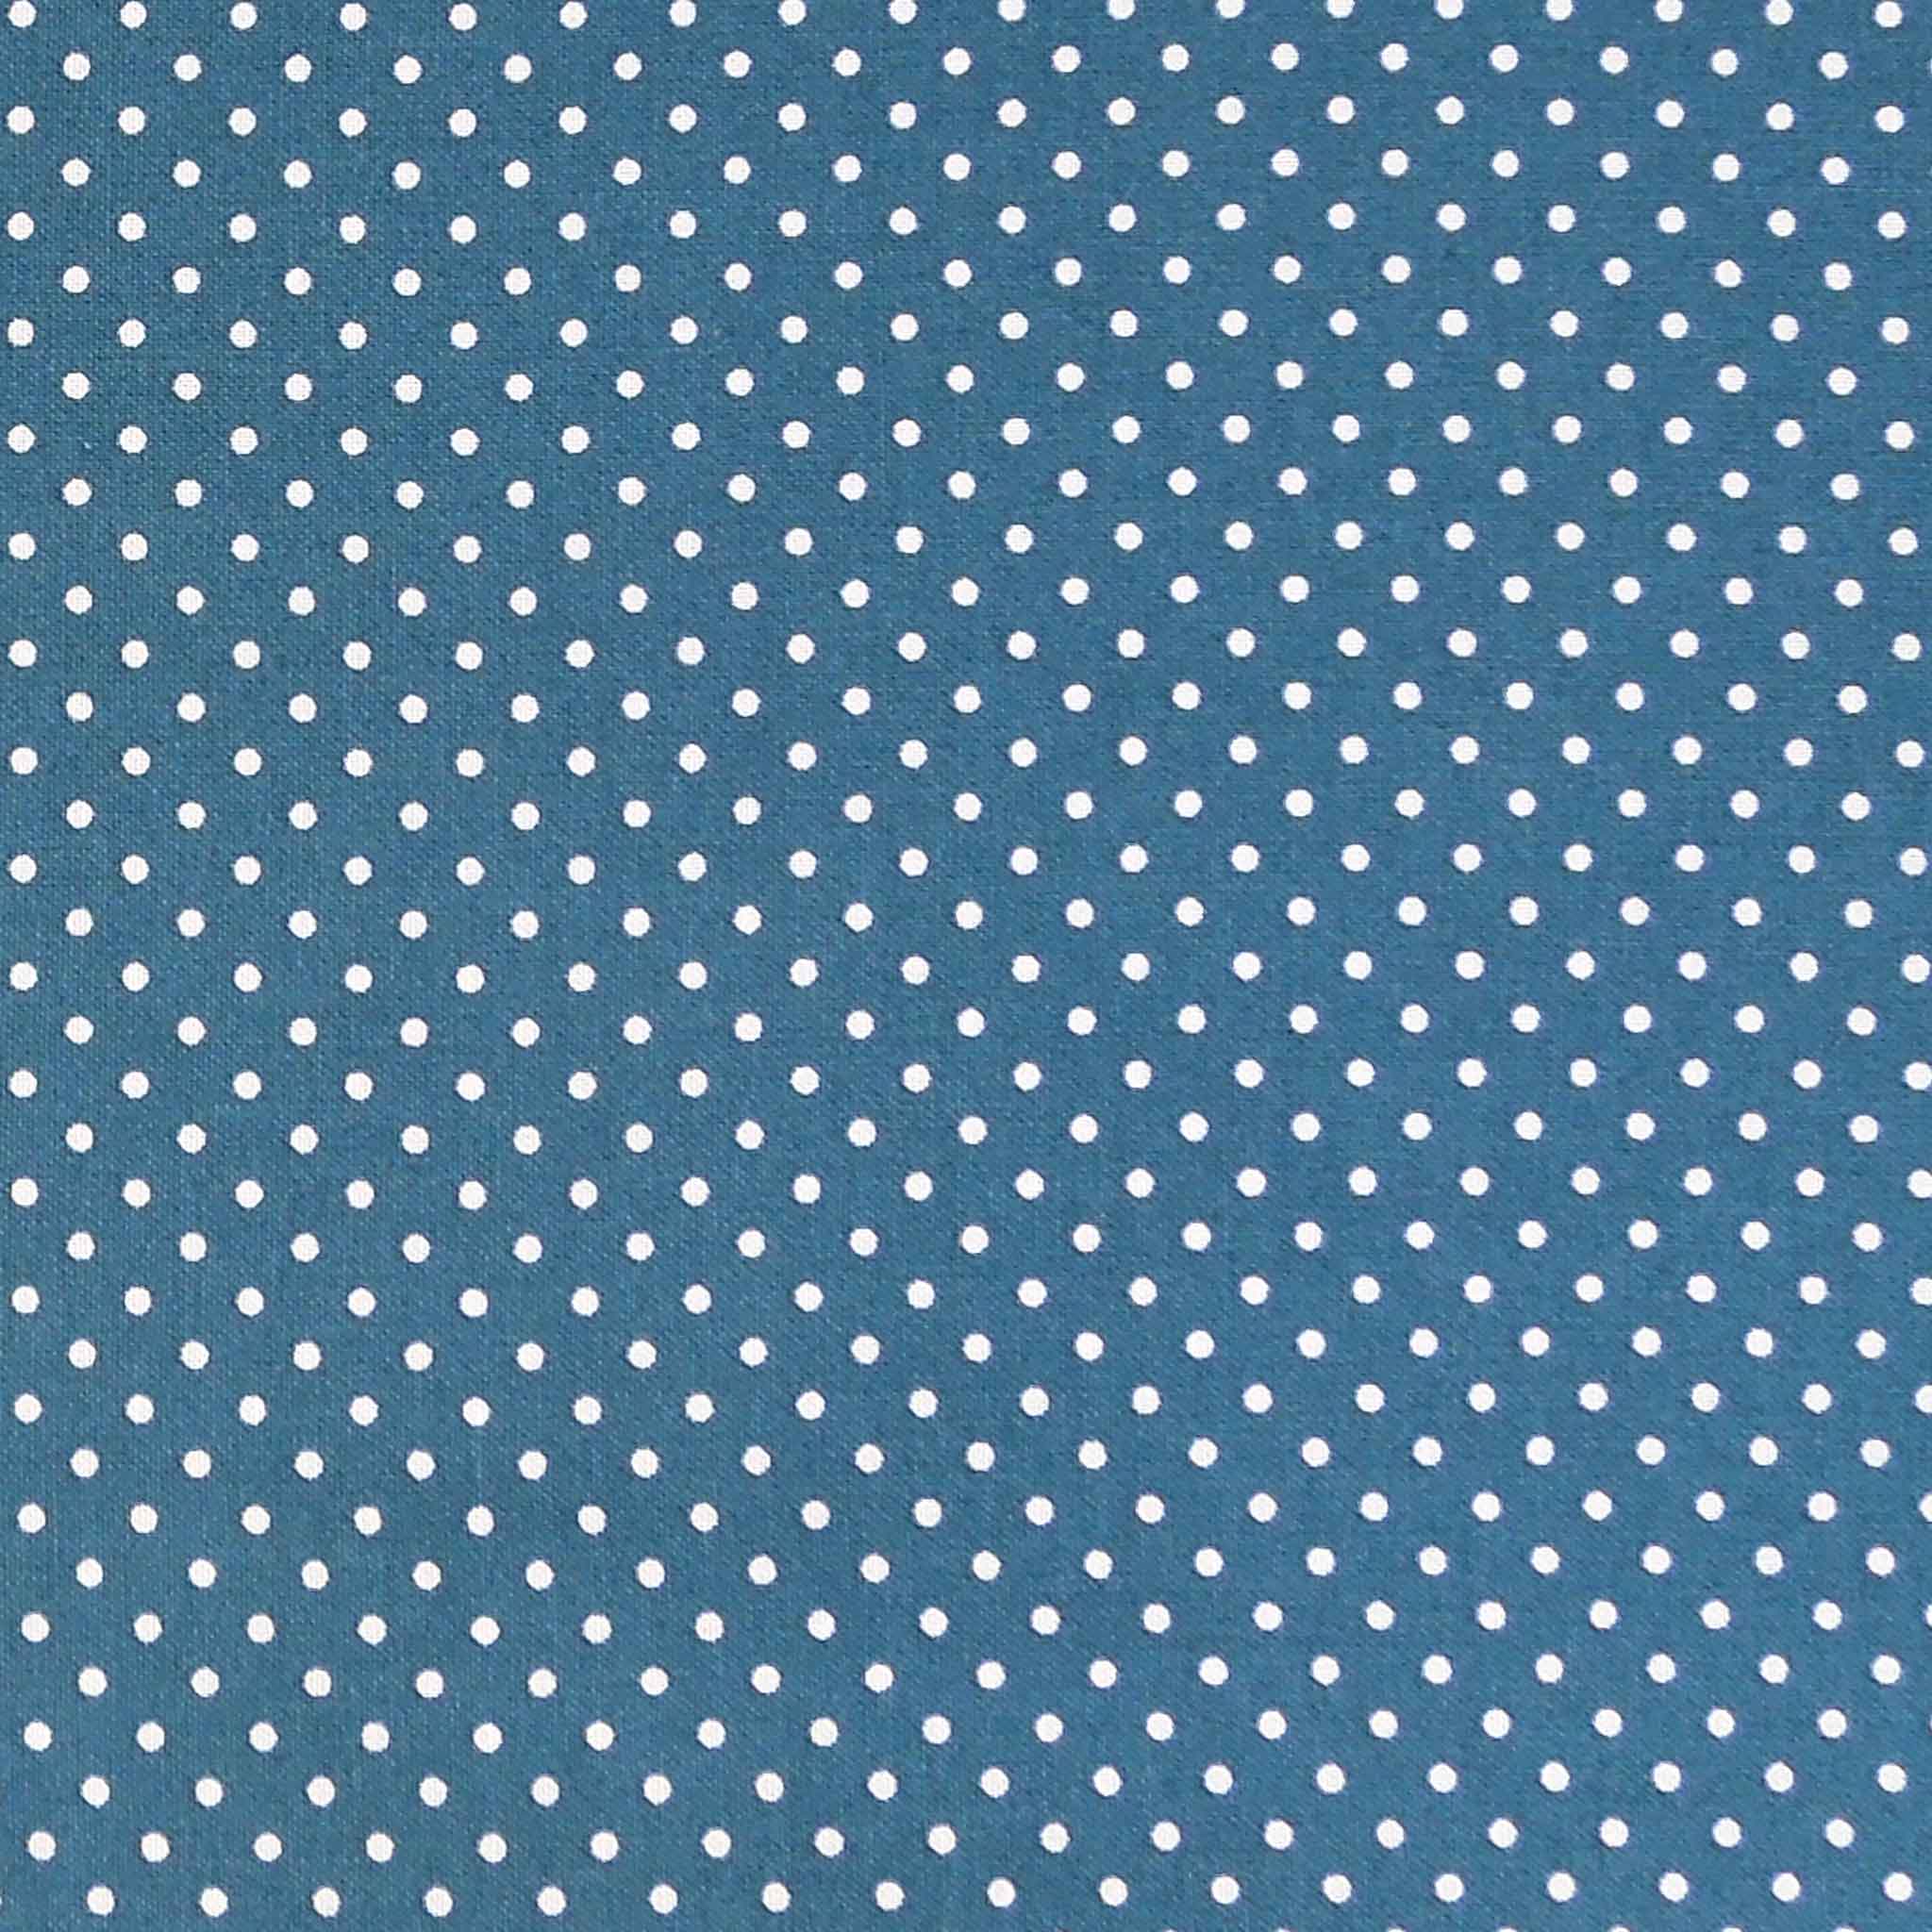 Small Polka Dot Denim Blue - Cotton Fabric